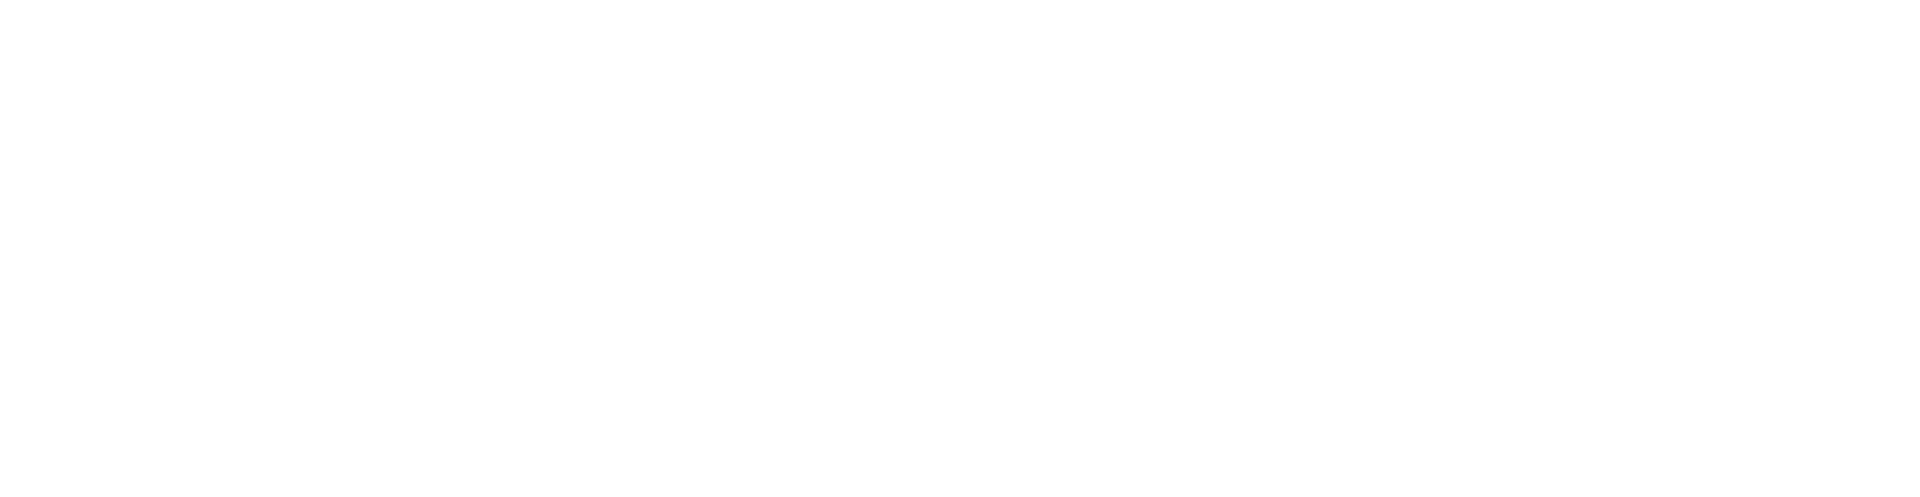 Logo Christian Complete